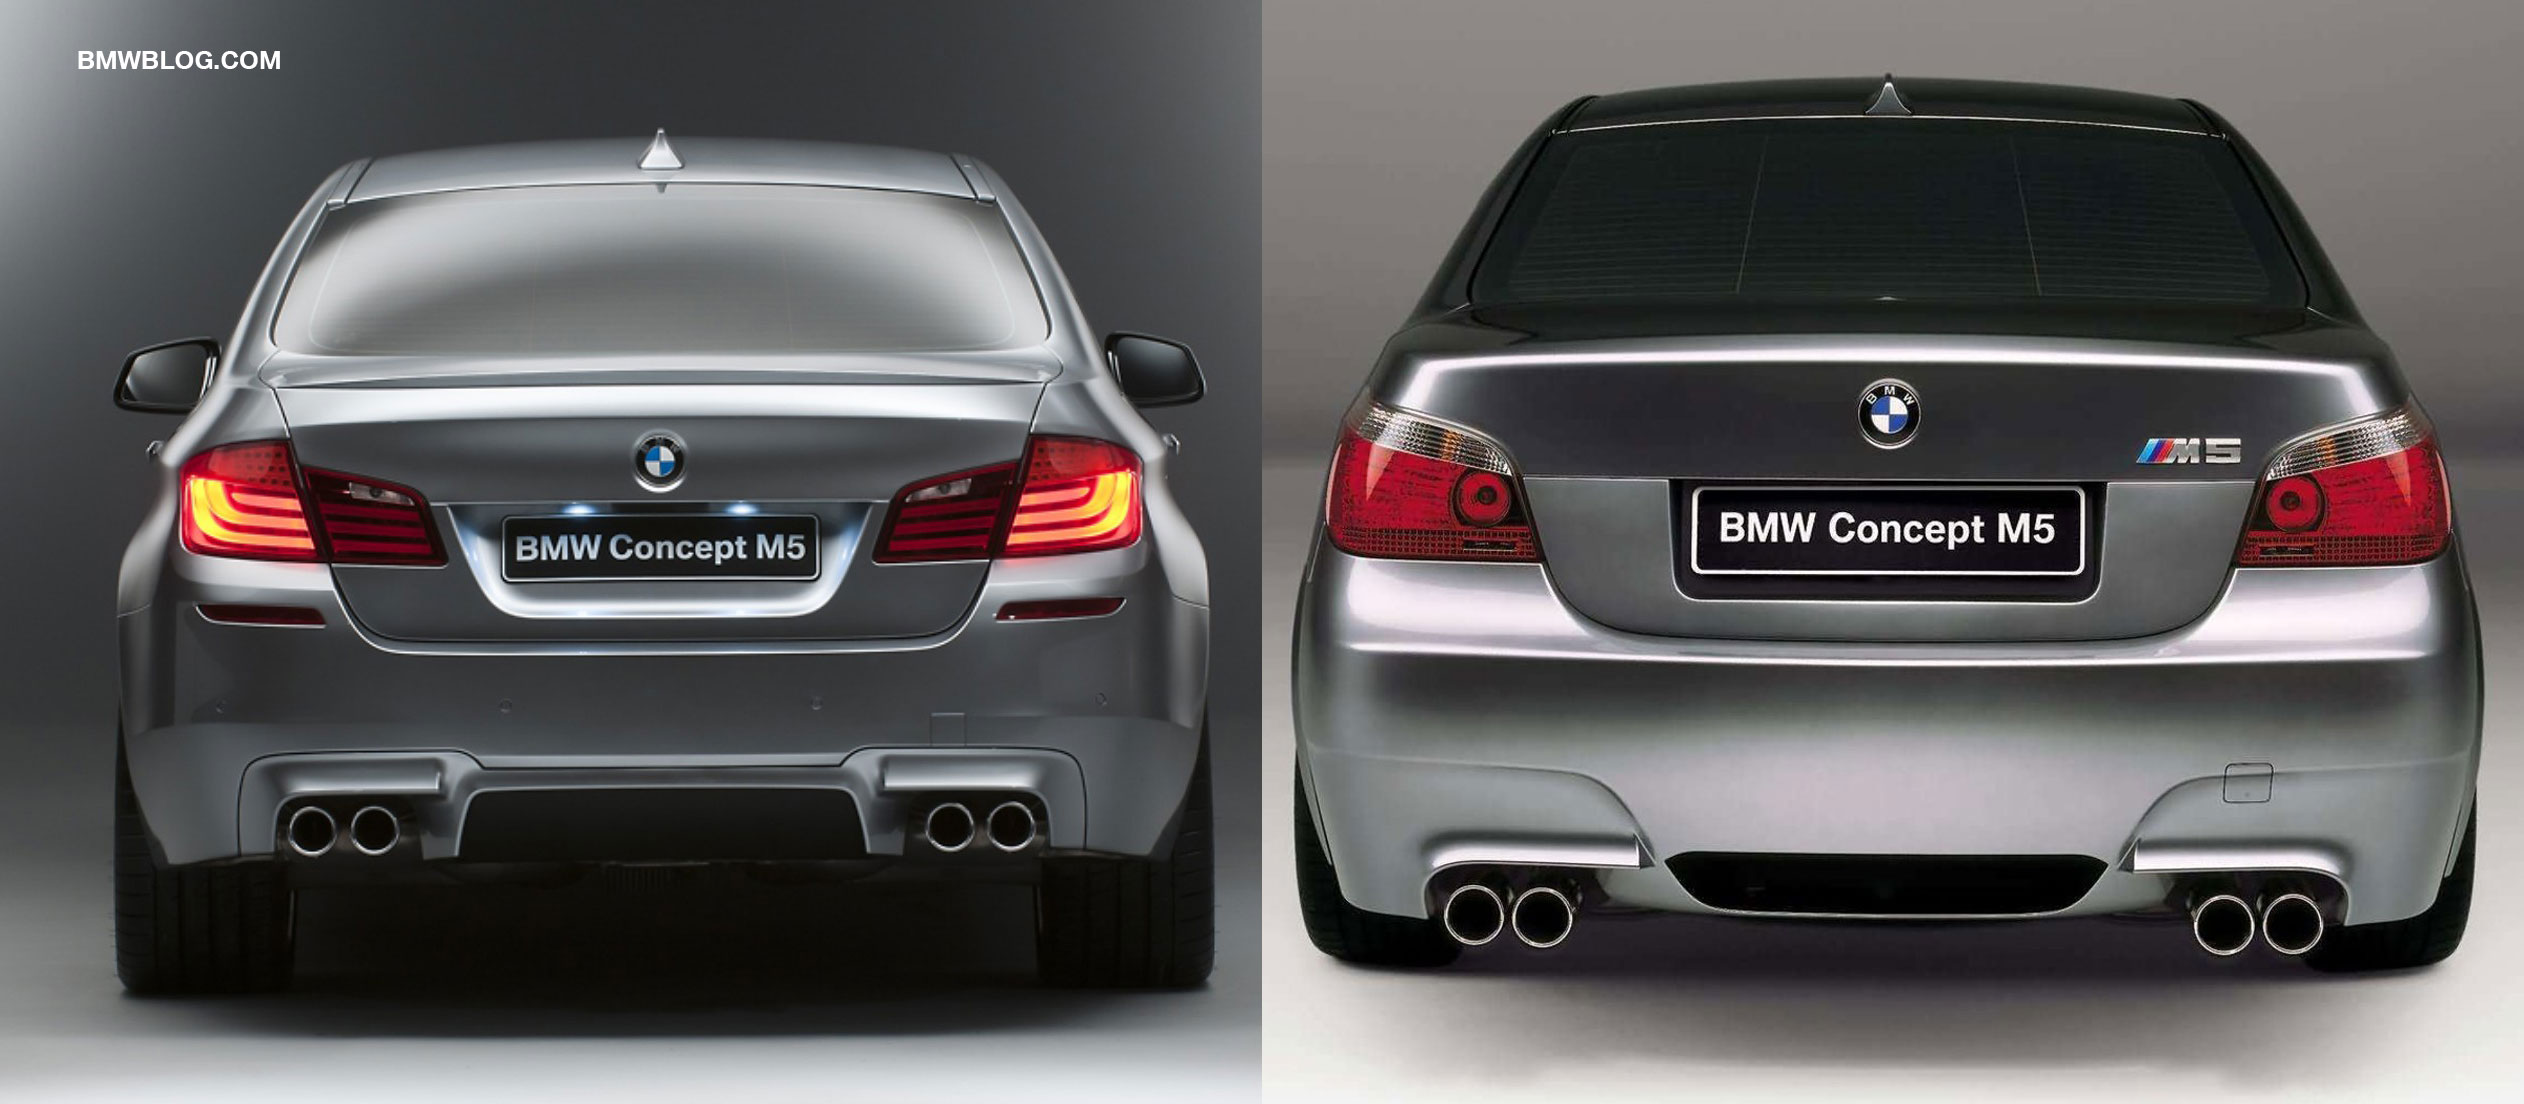 Как отличить bmw. BMW m5 f10. BMW m5 e90. BMW m5 f10 дорестайлинг. BMW m5 v10.